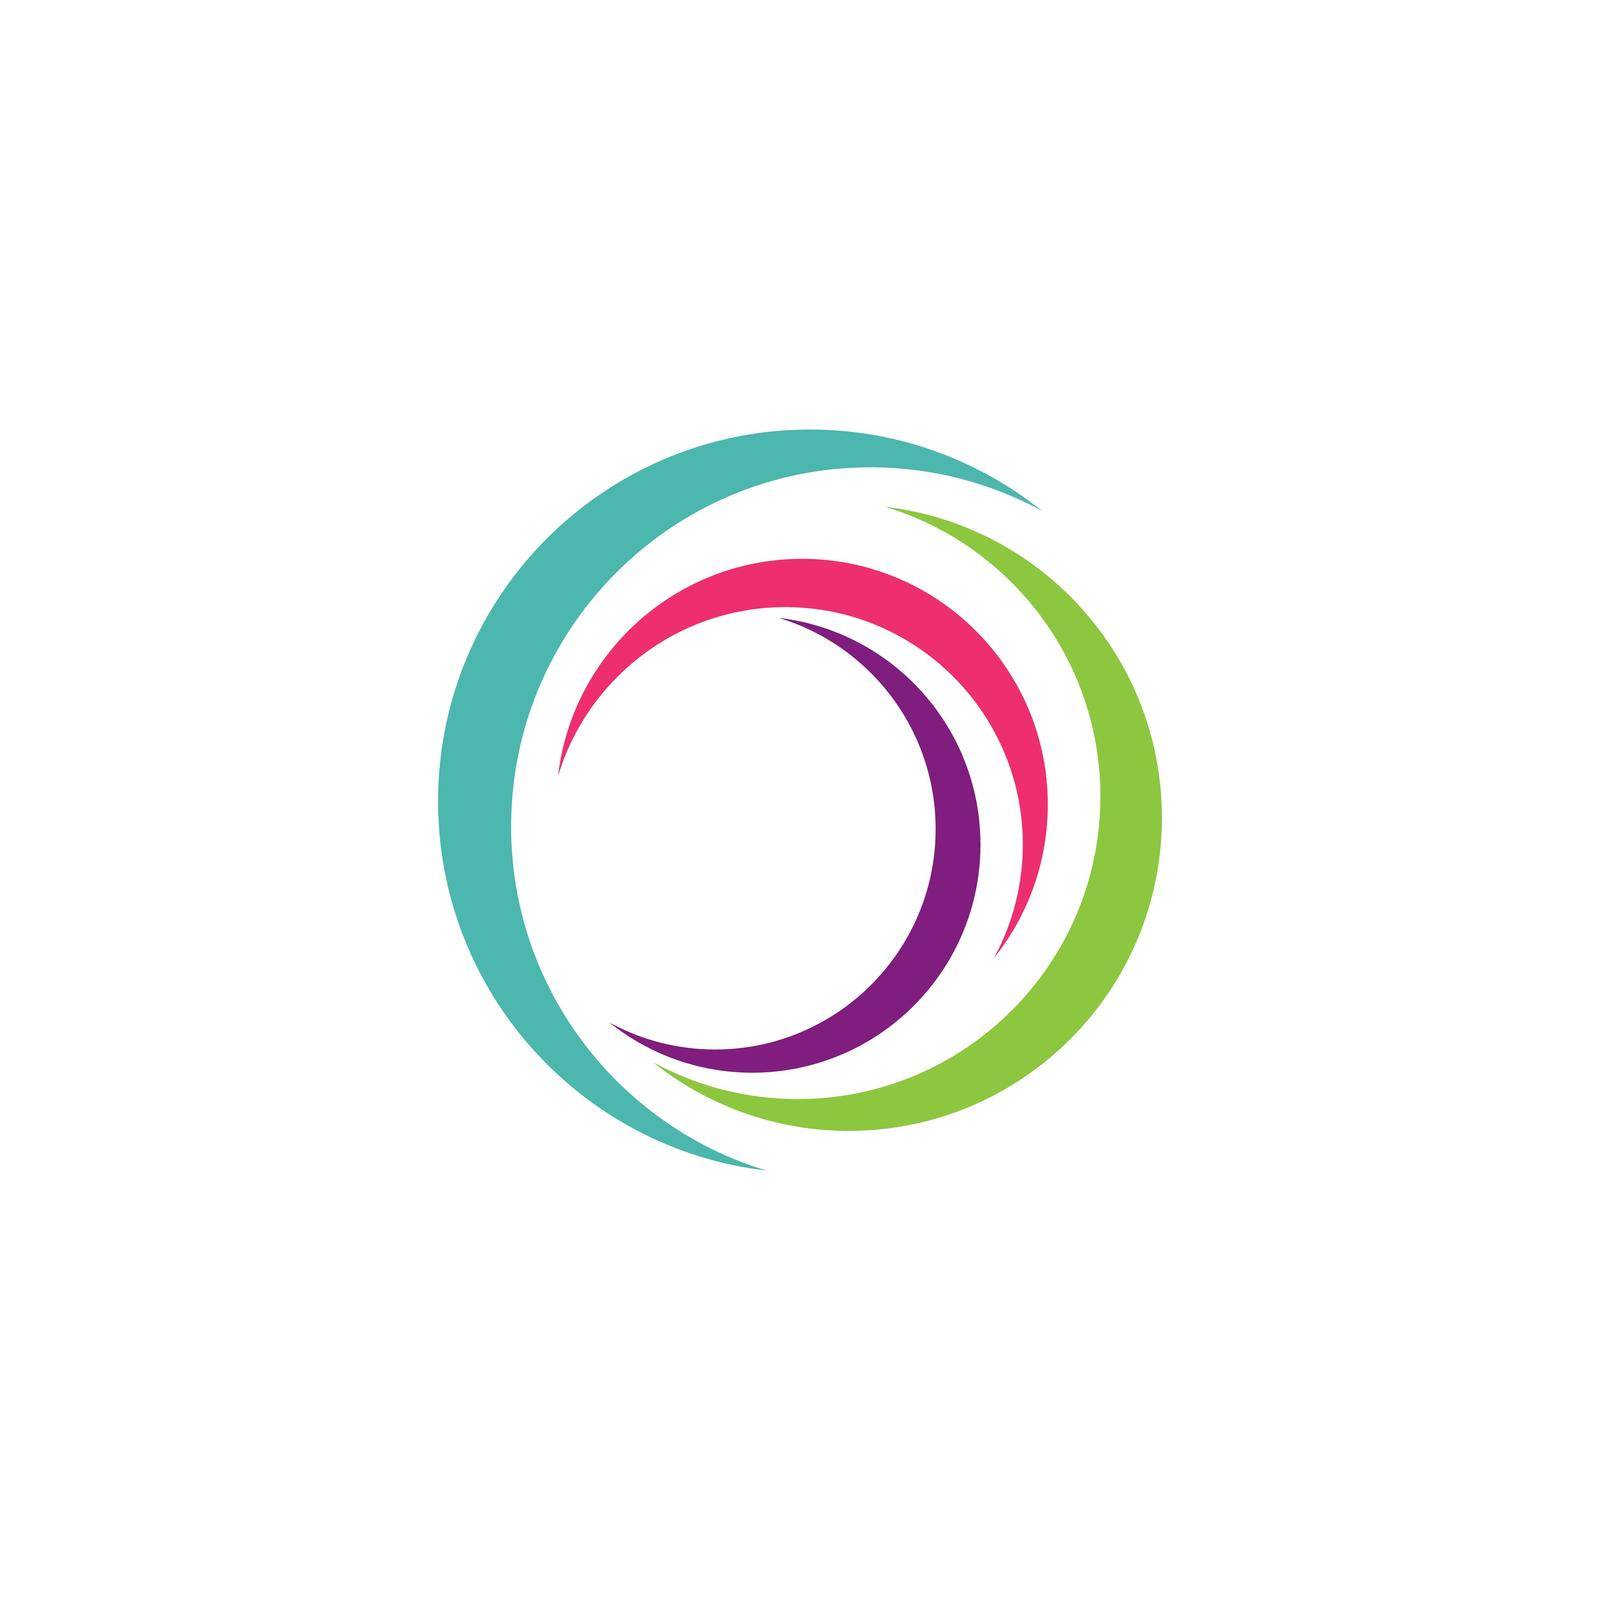 Circular logo by awk